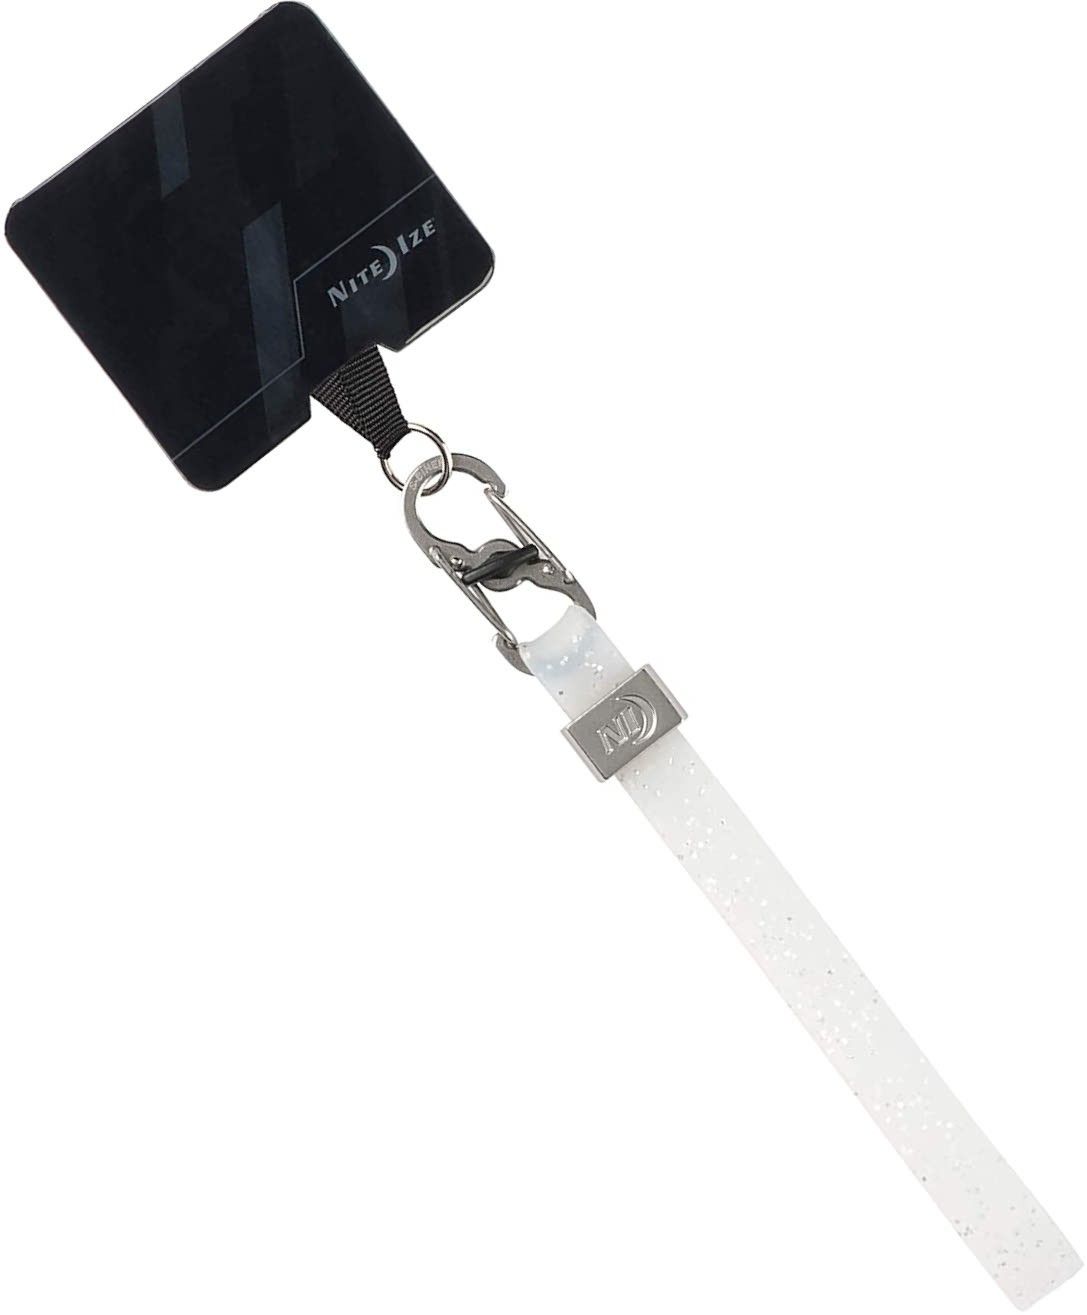 Крепление для телефона с карабином Nite Ize Hitch Phone Anchor + Stretch Strap HPSS-0211-R7, белый с блестками - фото